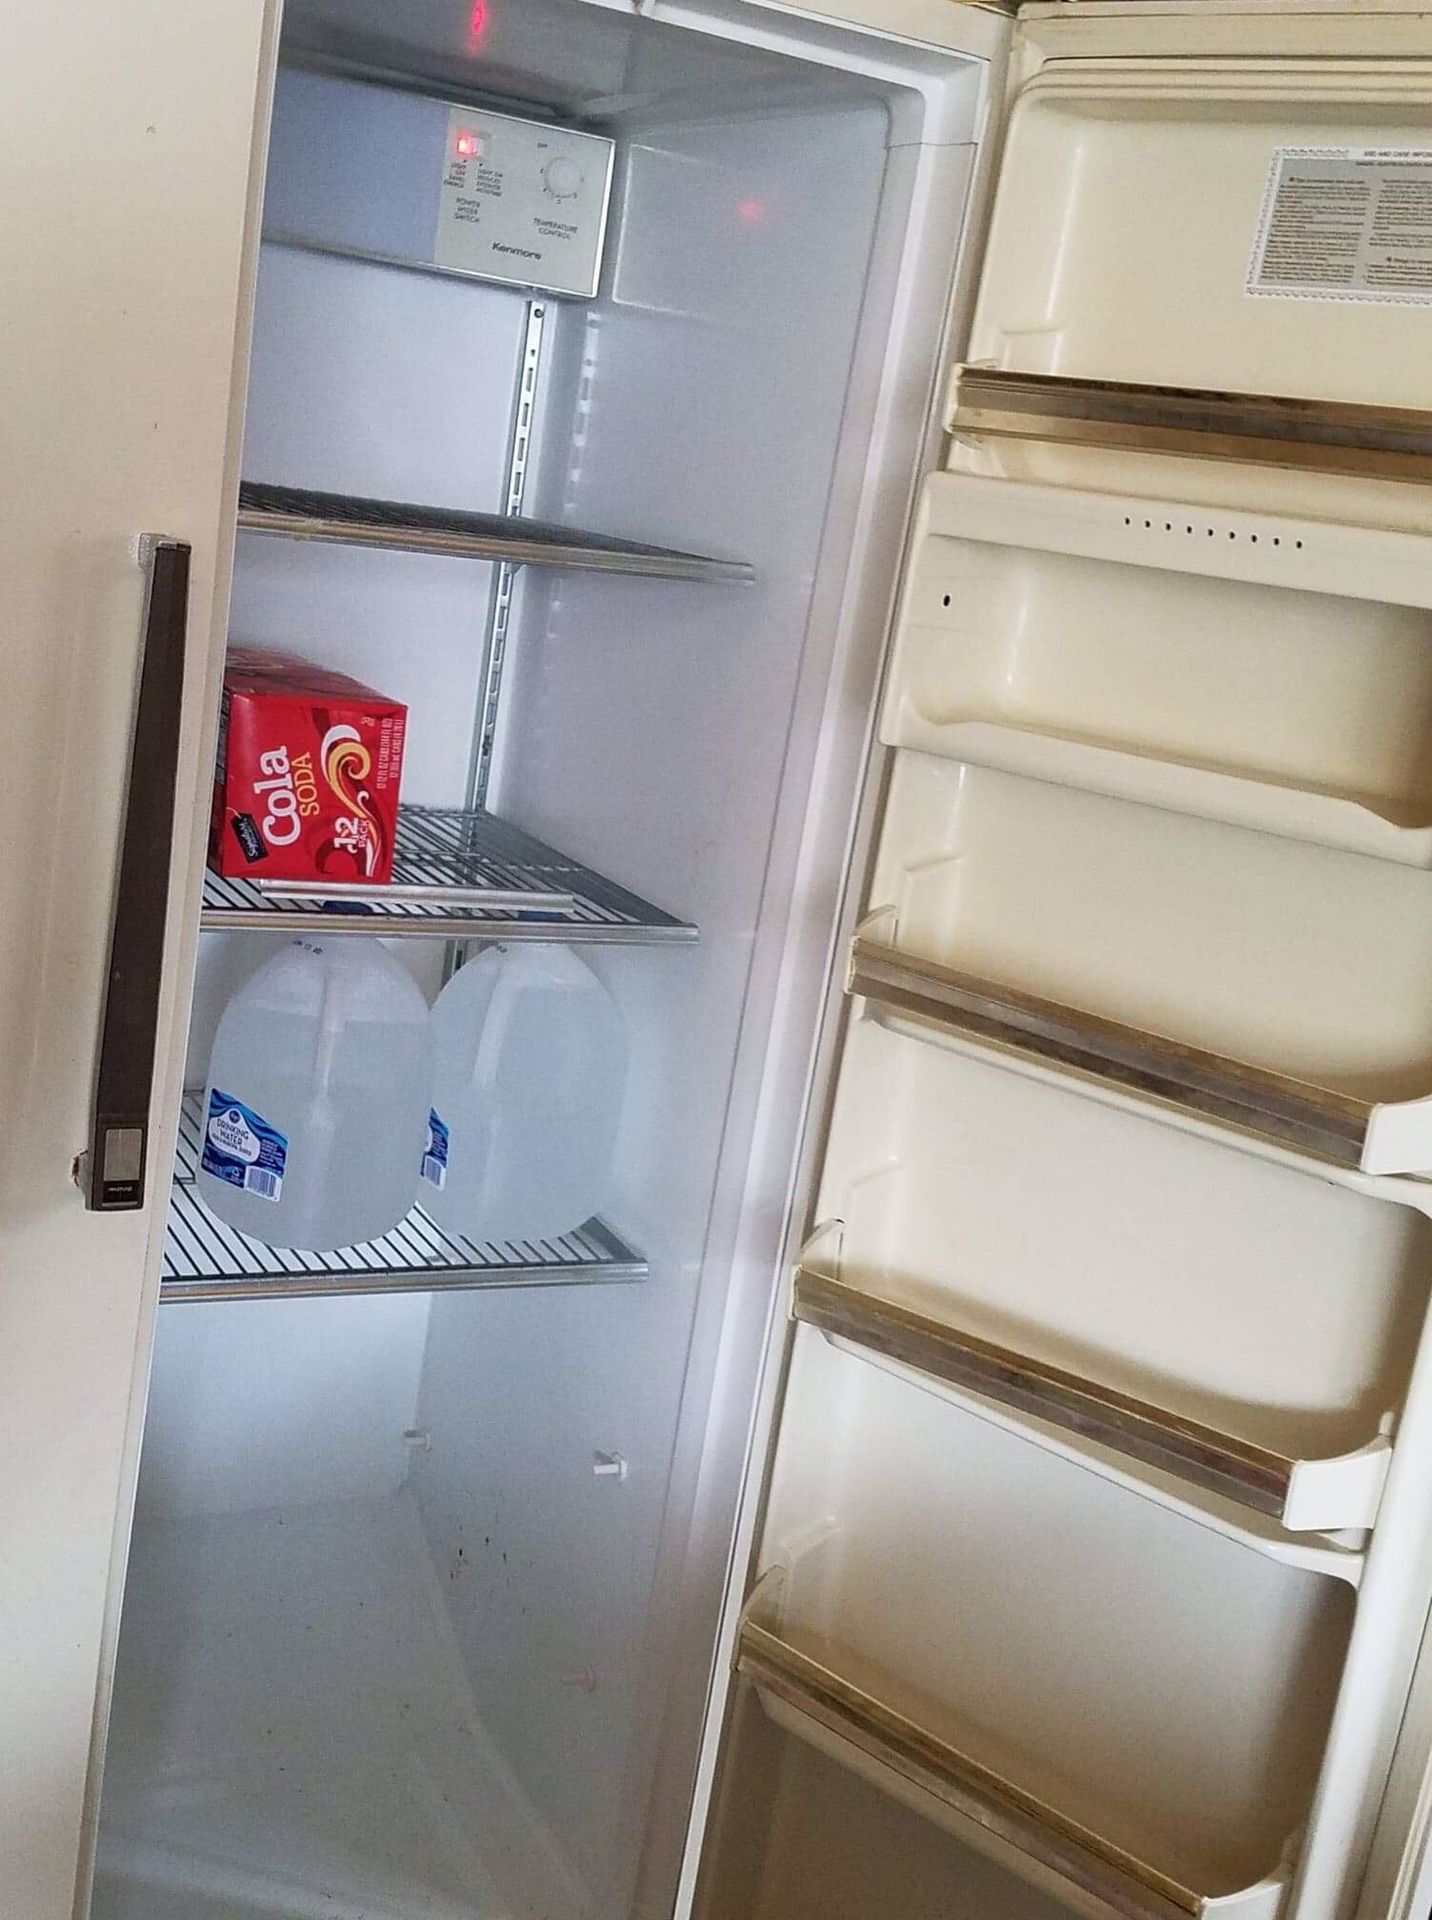 Free clean fridge works